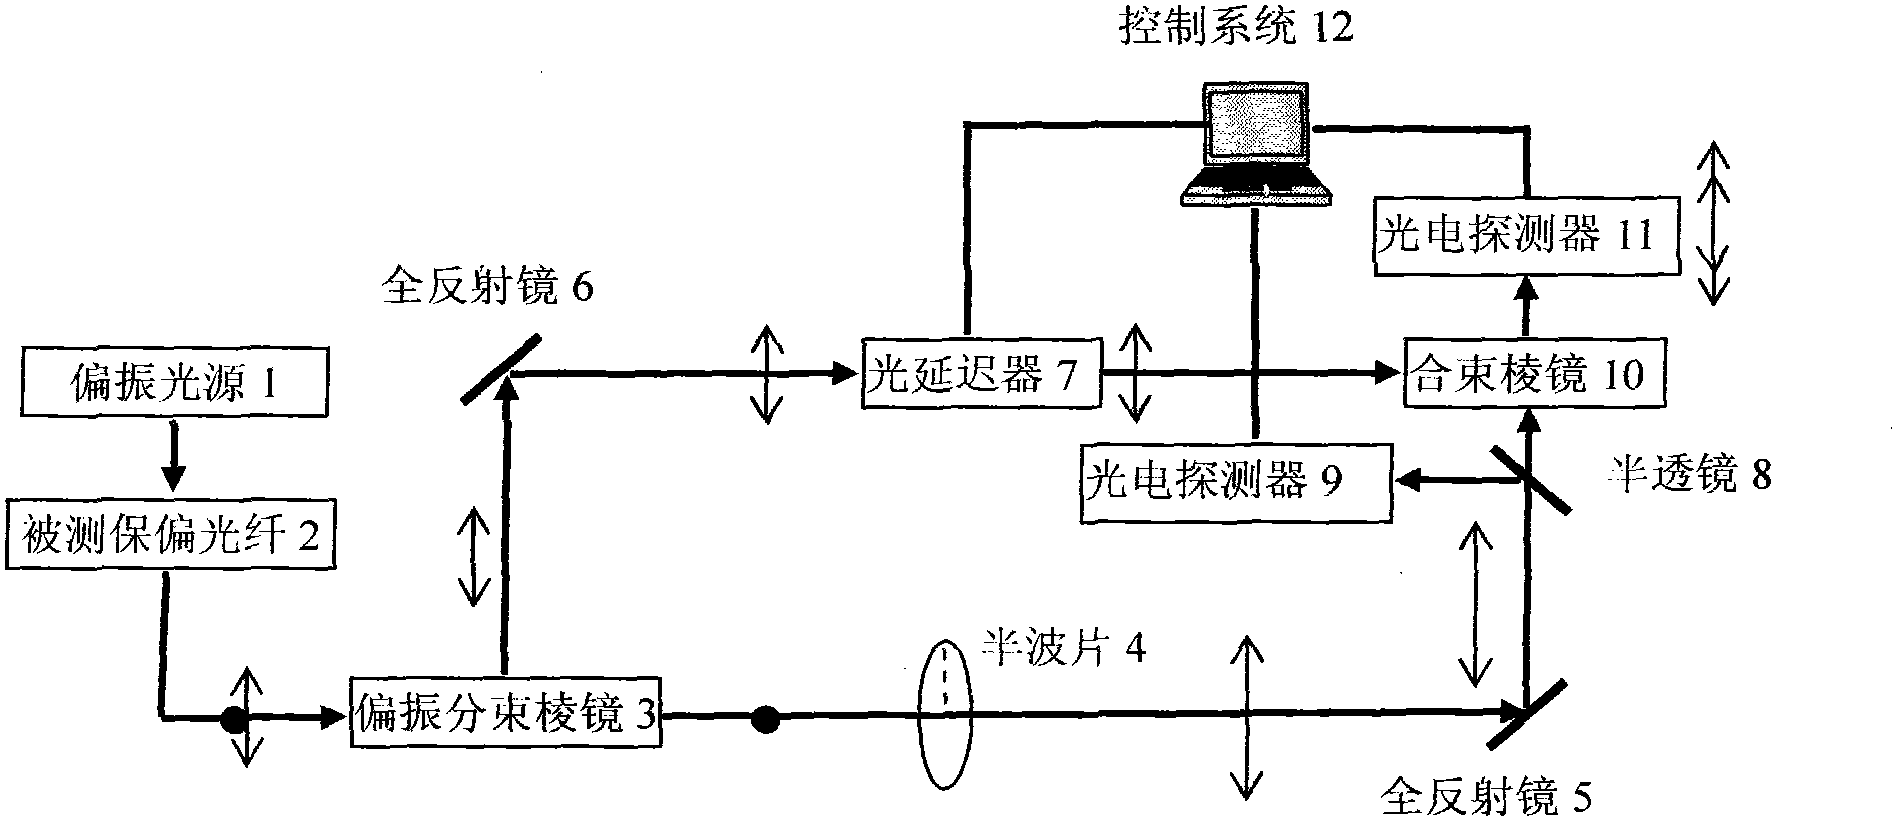 Method for testing polarization coupling strength of polarization maintaining optical fiber based on polarization beam-splitting interference technique